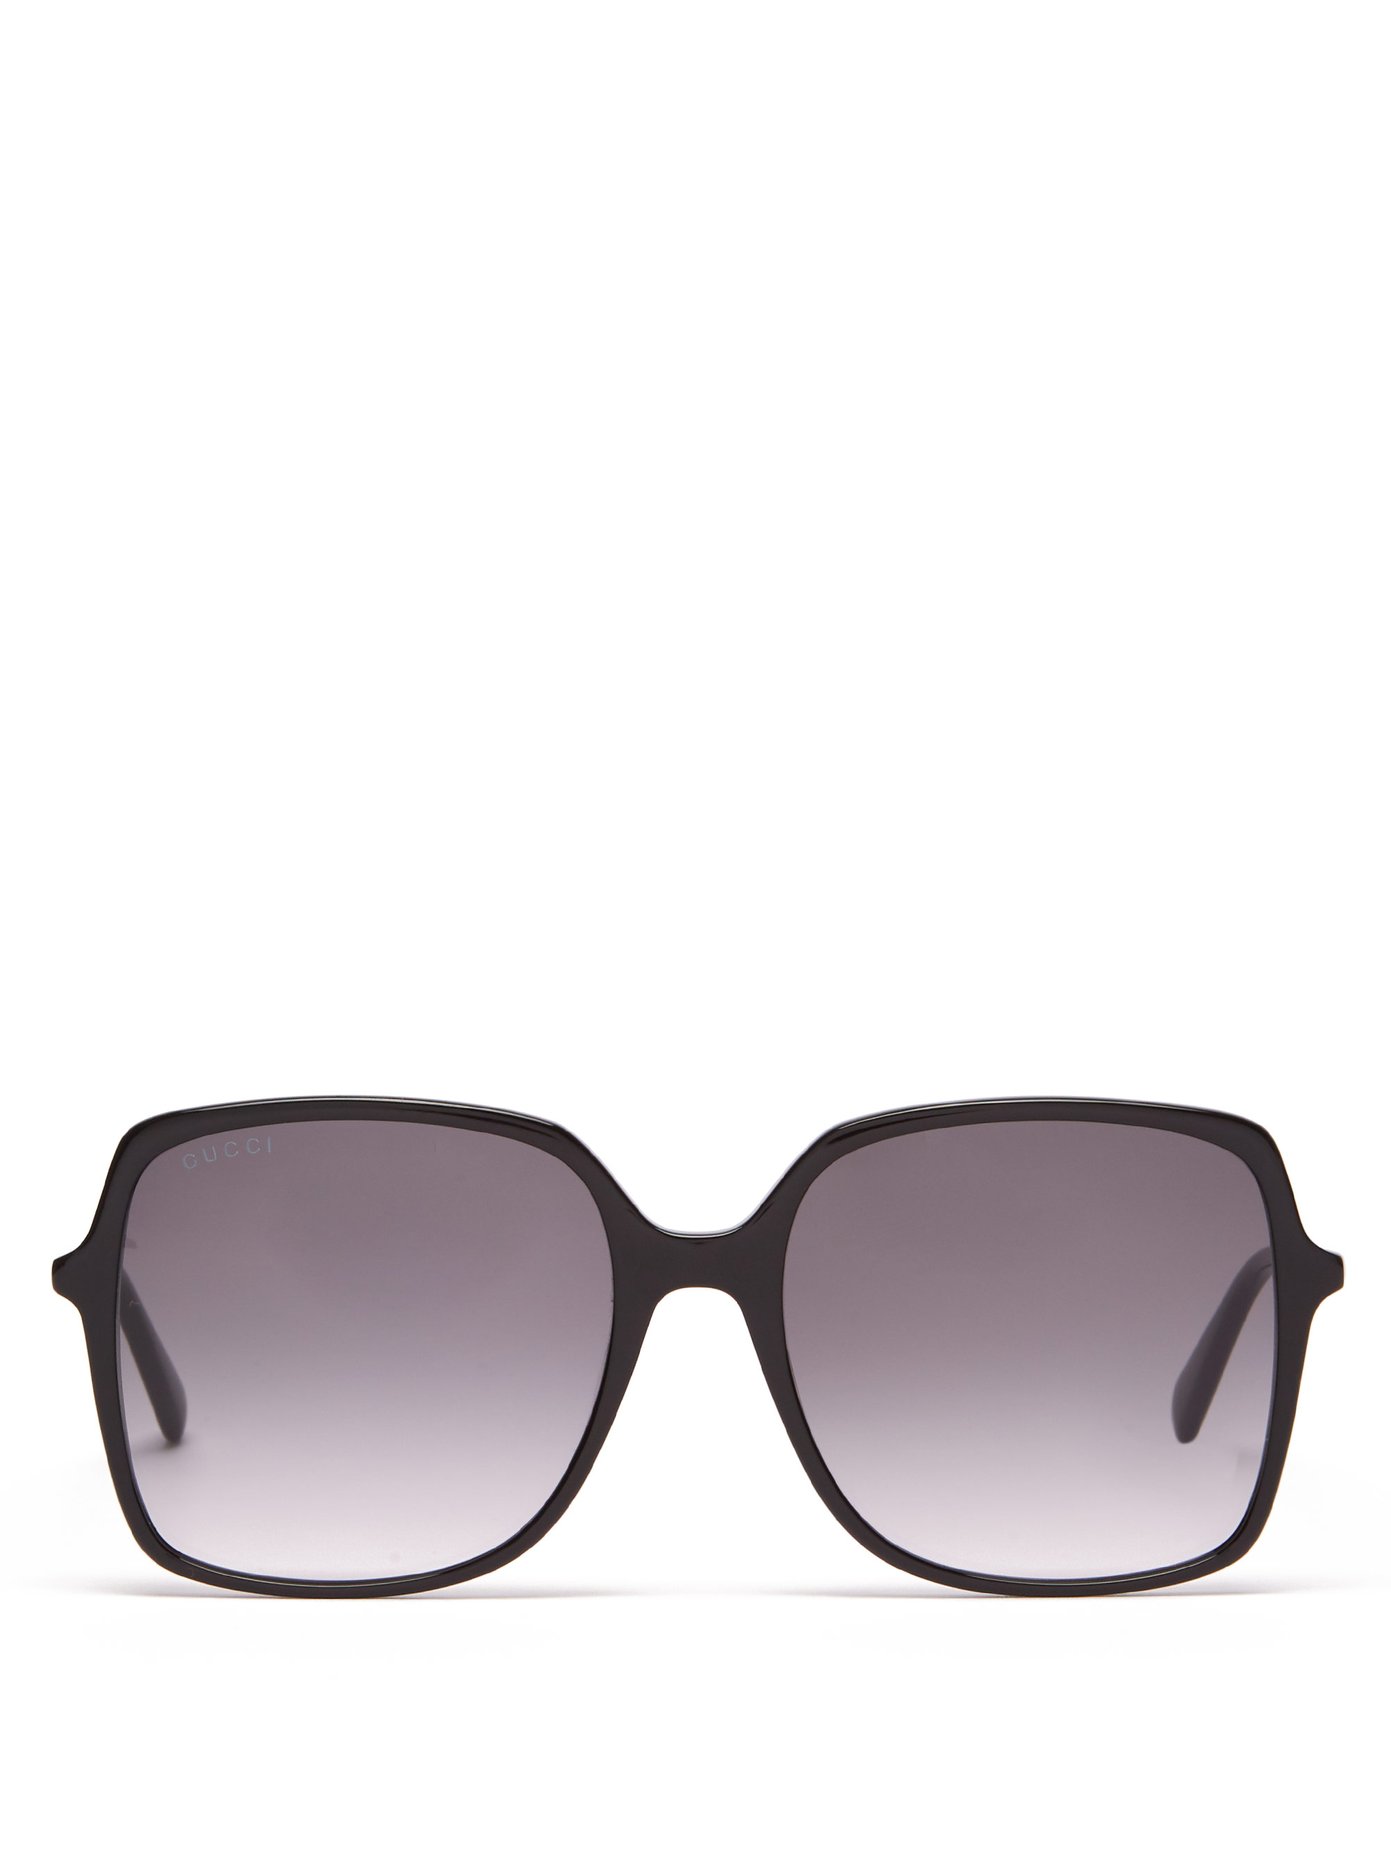 gucci oversized square acetate sunglasses